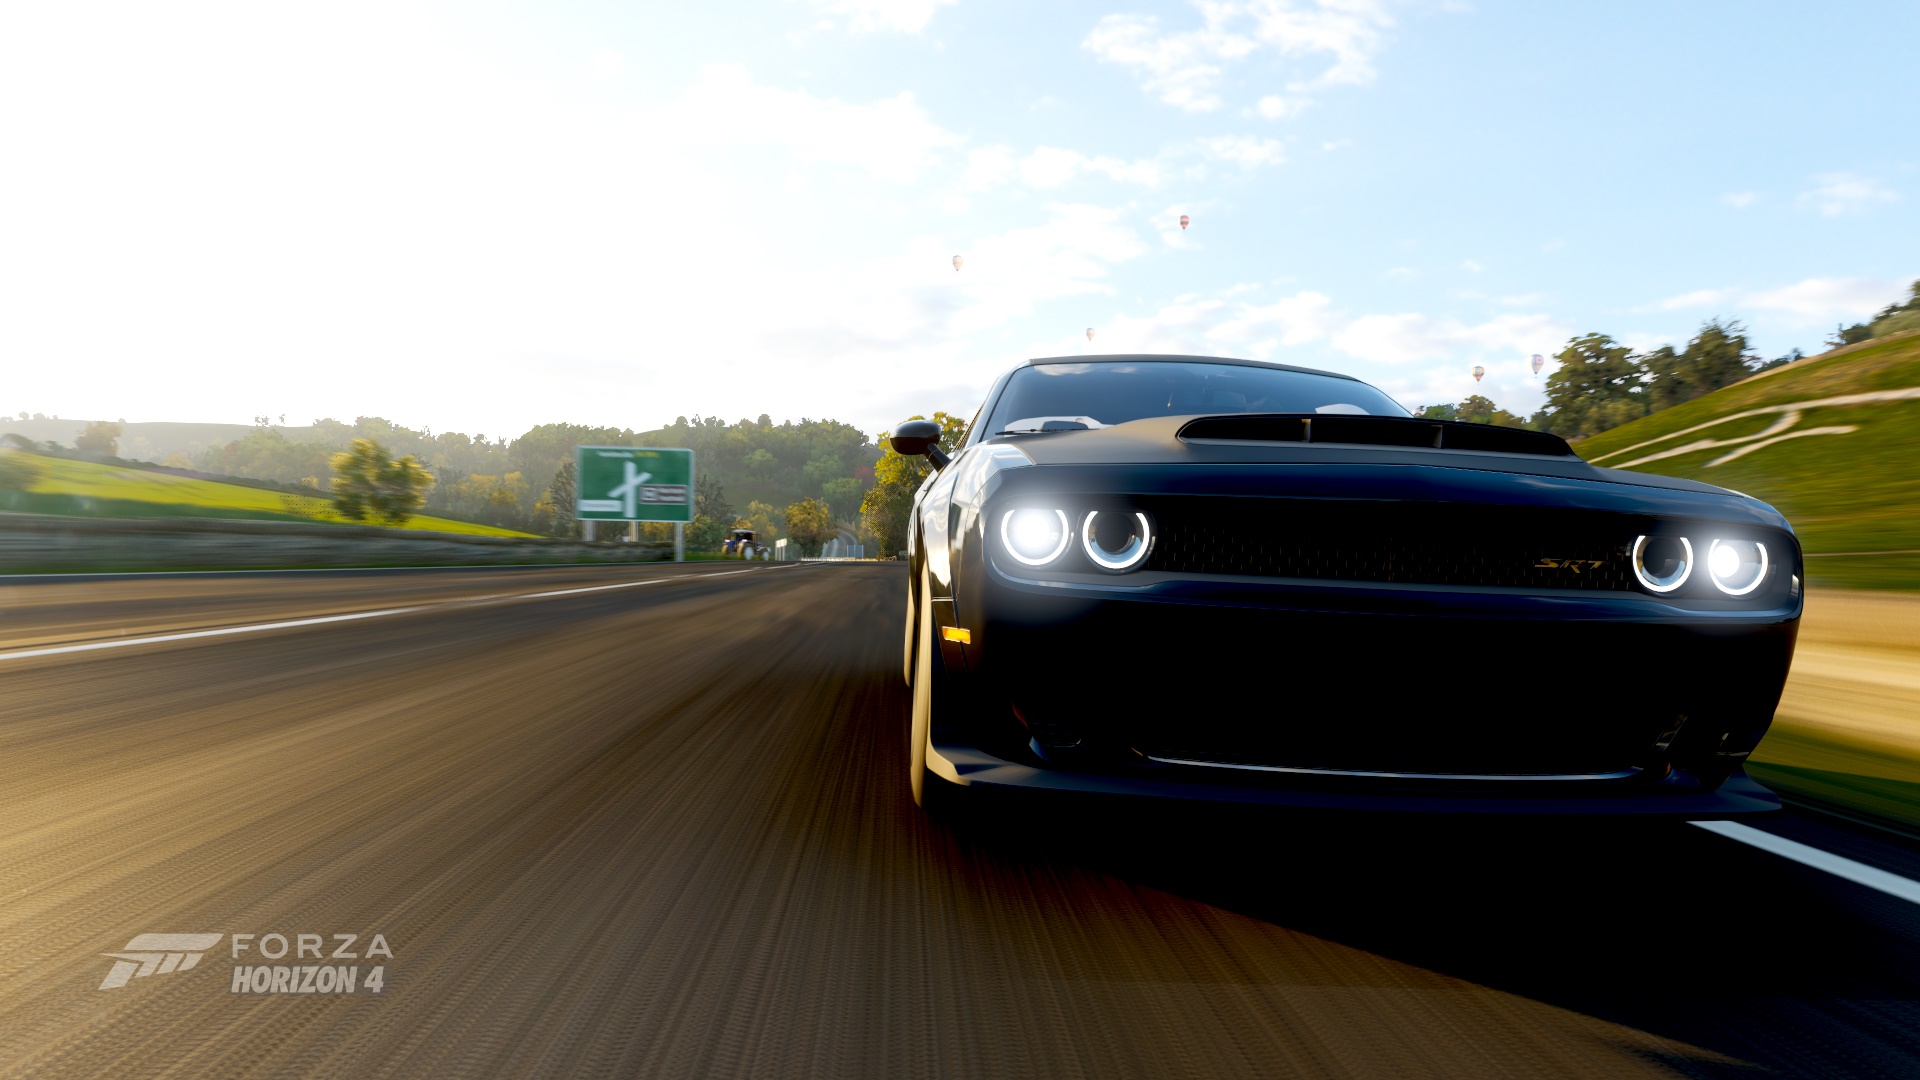 General 1920x1080 Forza Forza Horizon 4 car vehicle sports car race cars video games